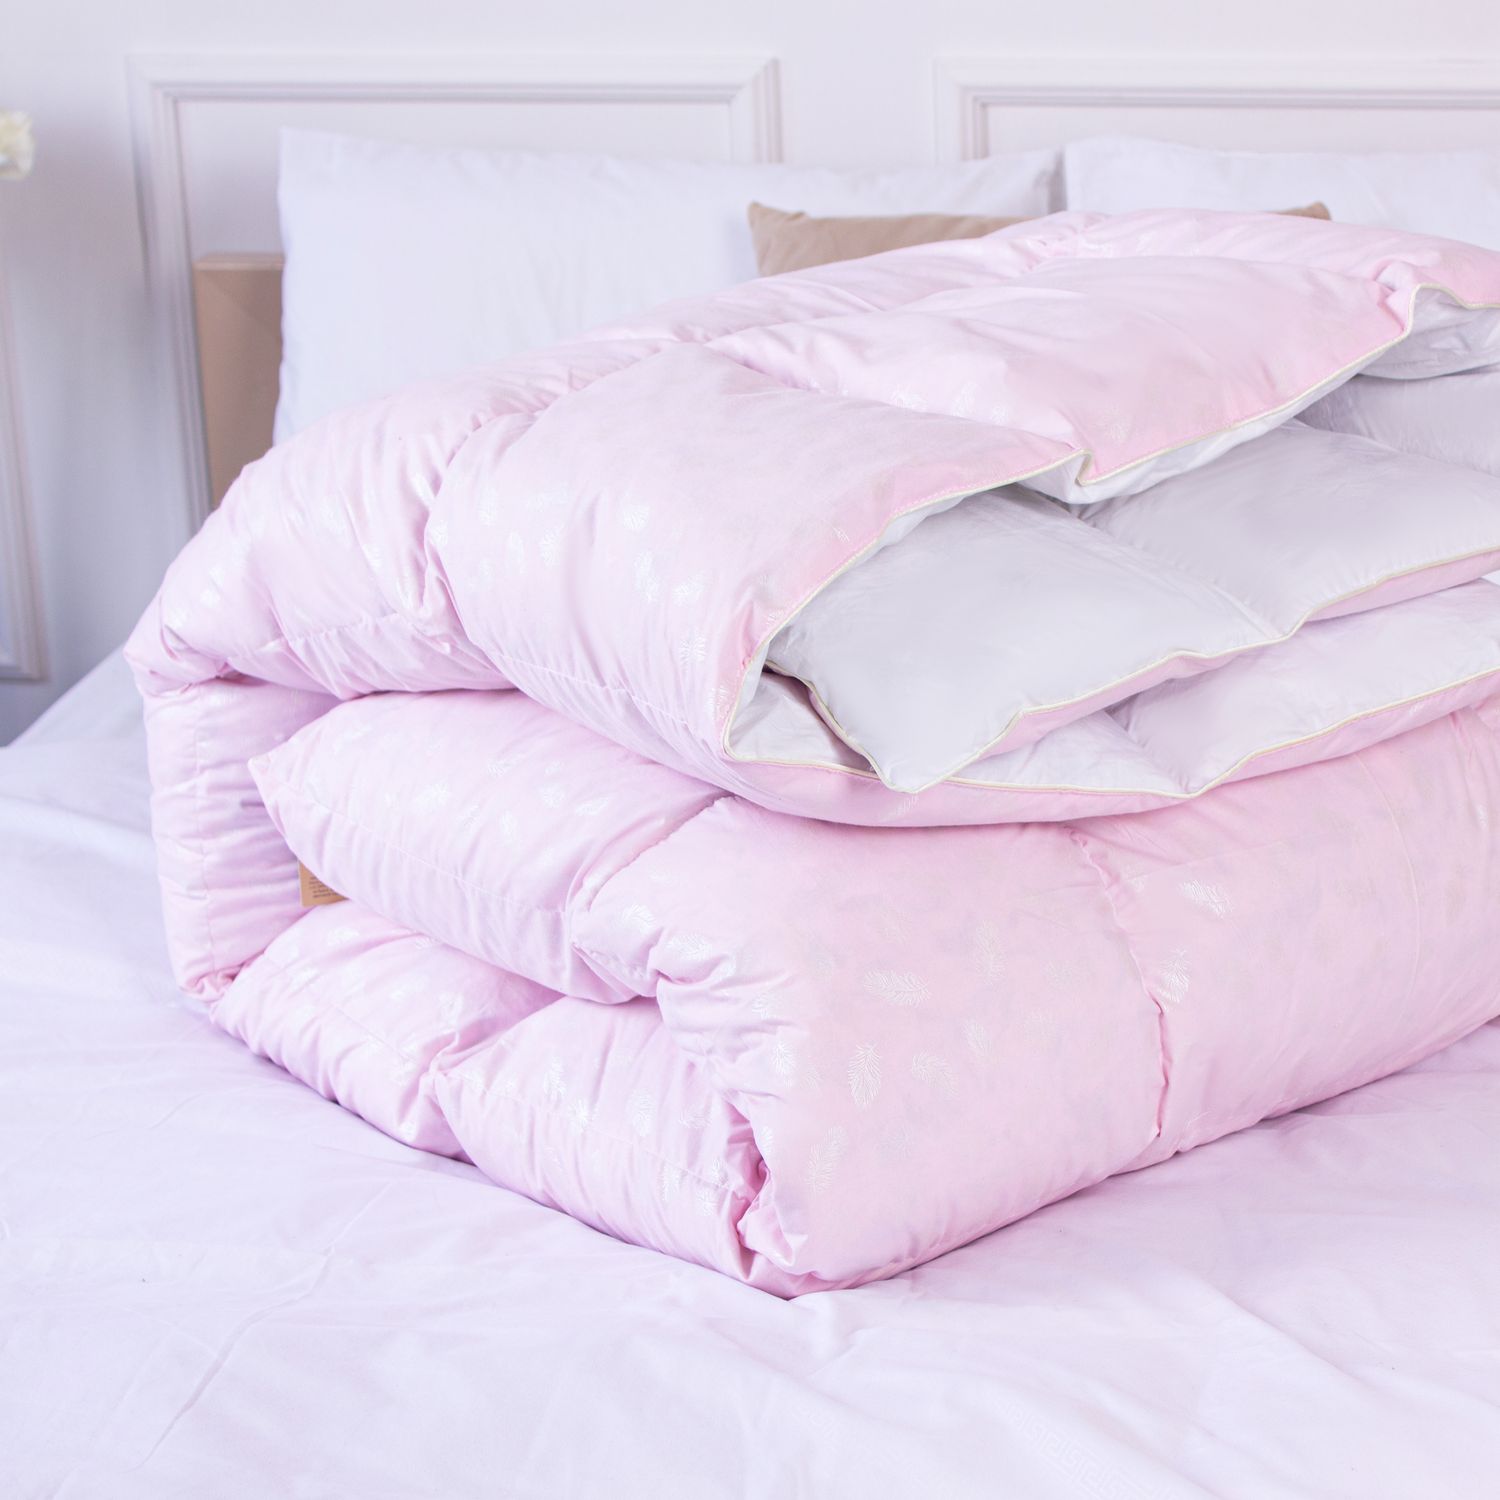 Одеяло пуховое MirSon Karmen №1844 Bio-Pink, 50% пух, полуторное, 205x140, розовое (2200003013818) - фото 3